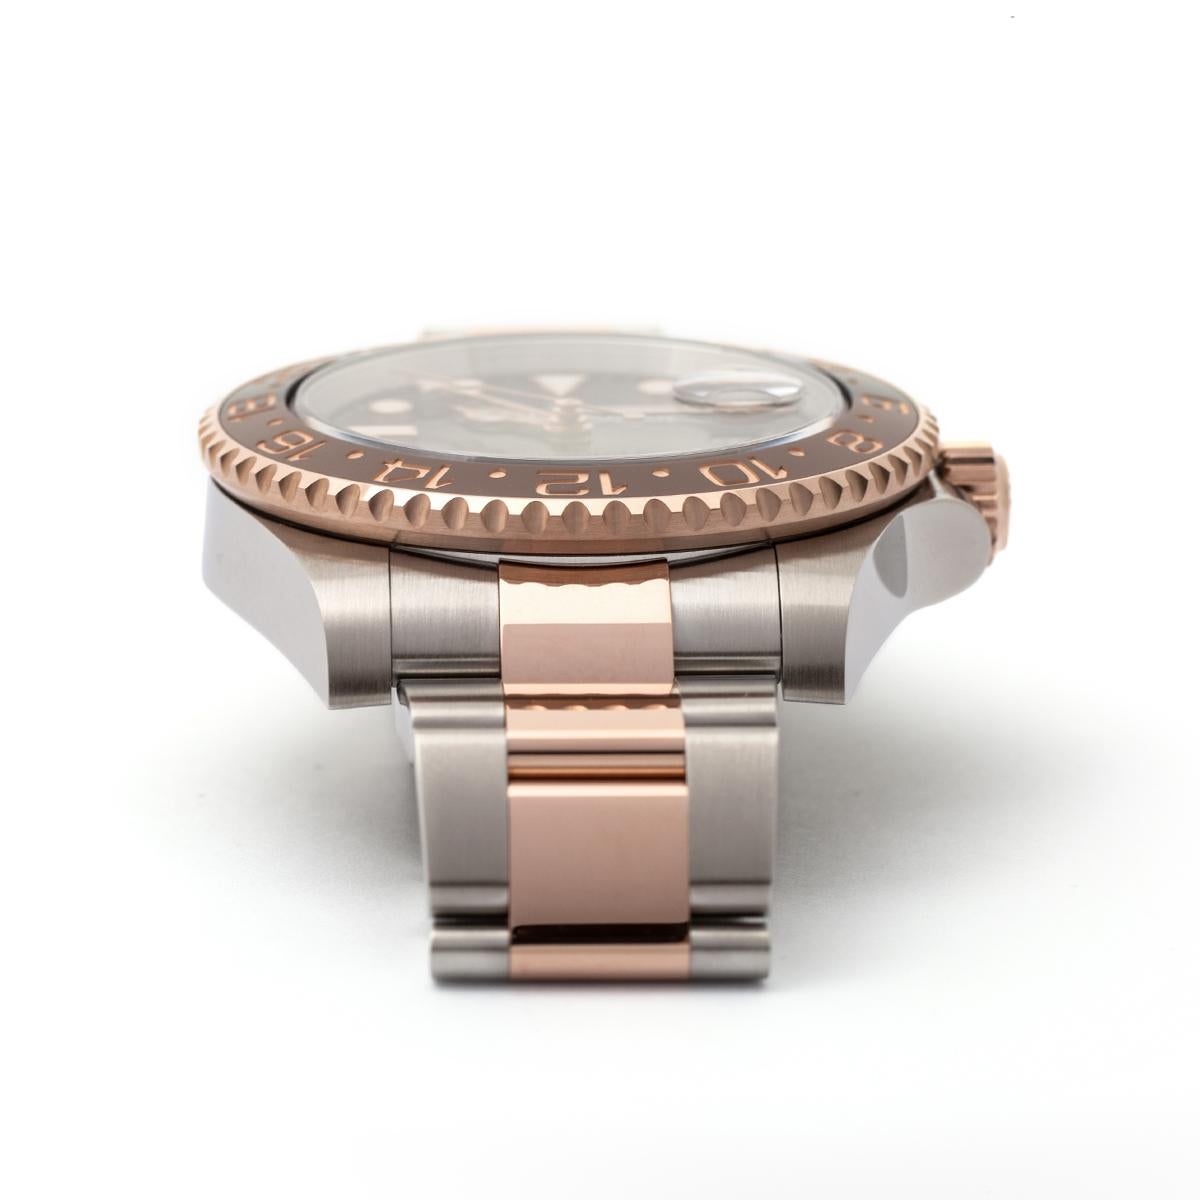 Rolex GMT Master II Wristwatch Certified 7